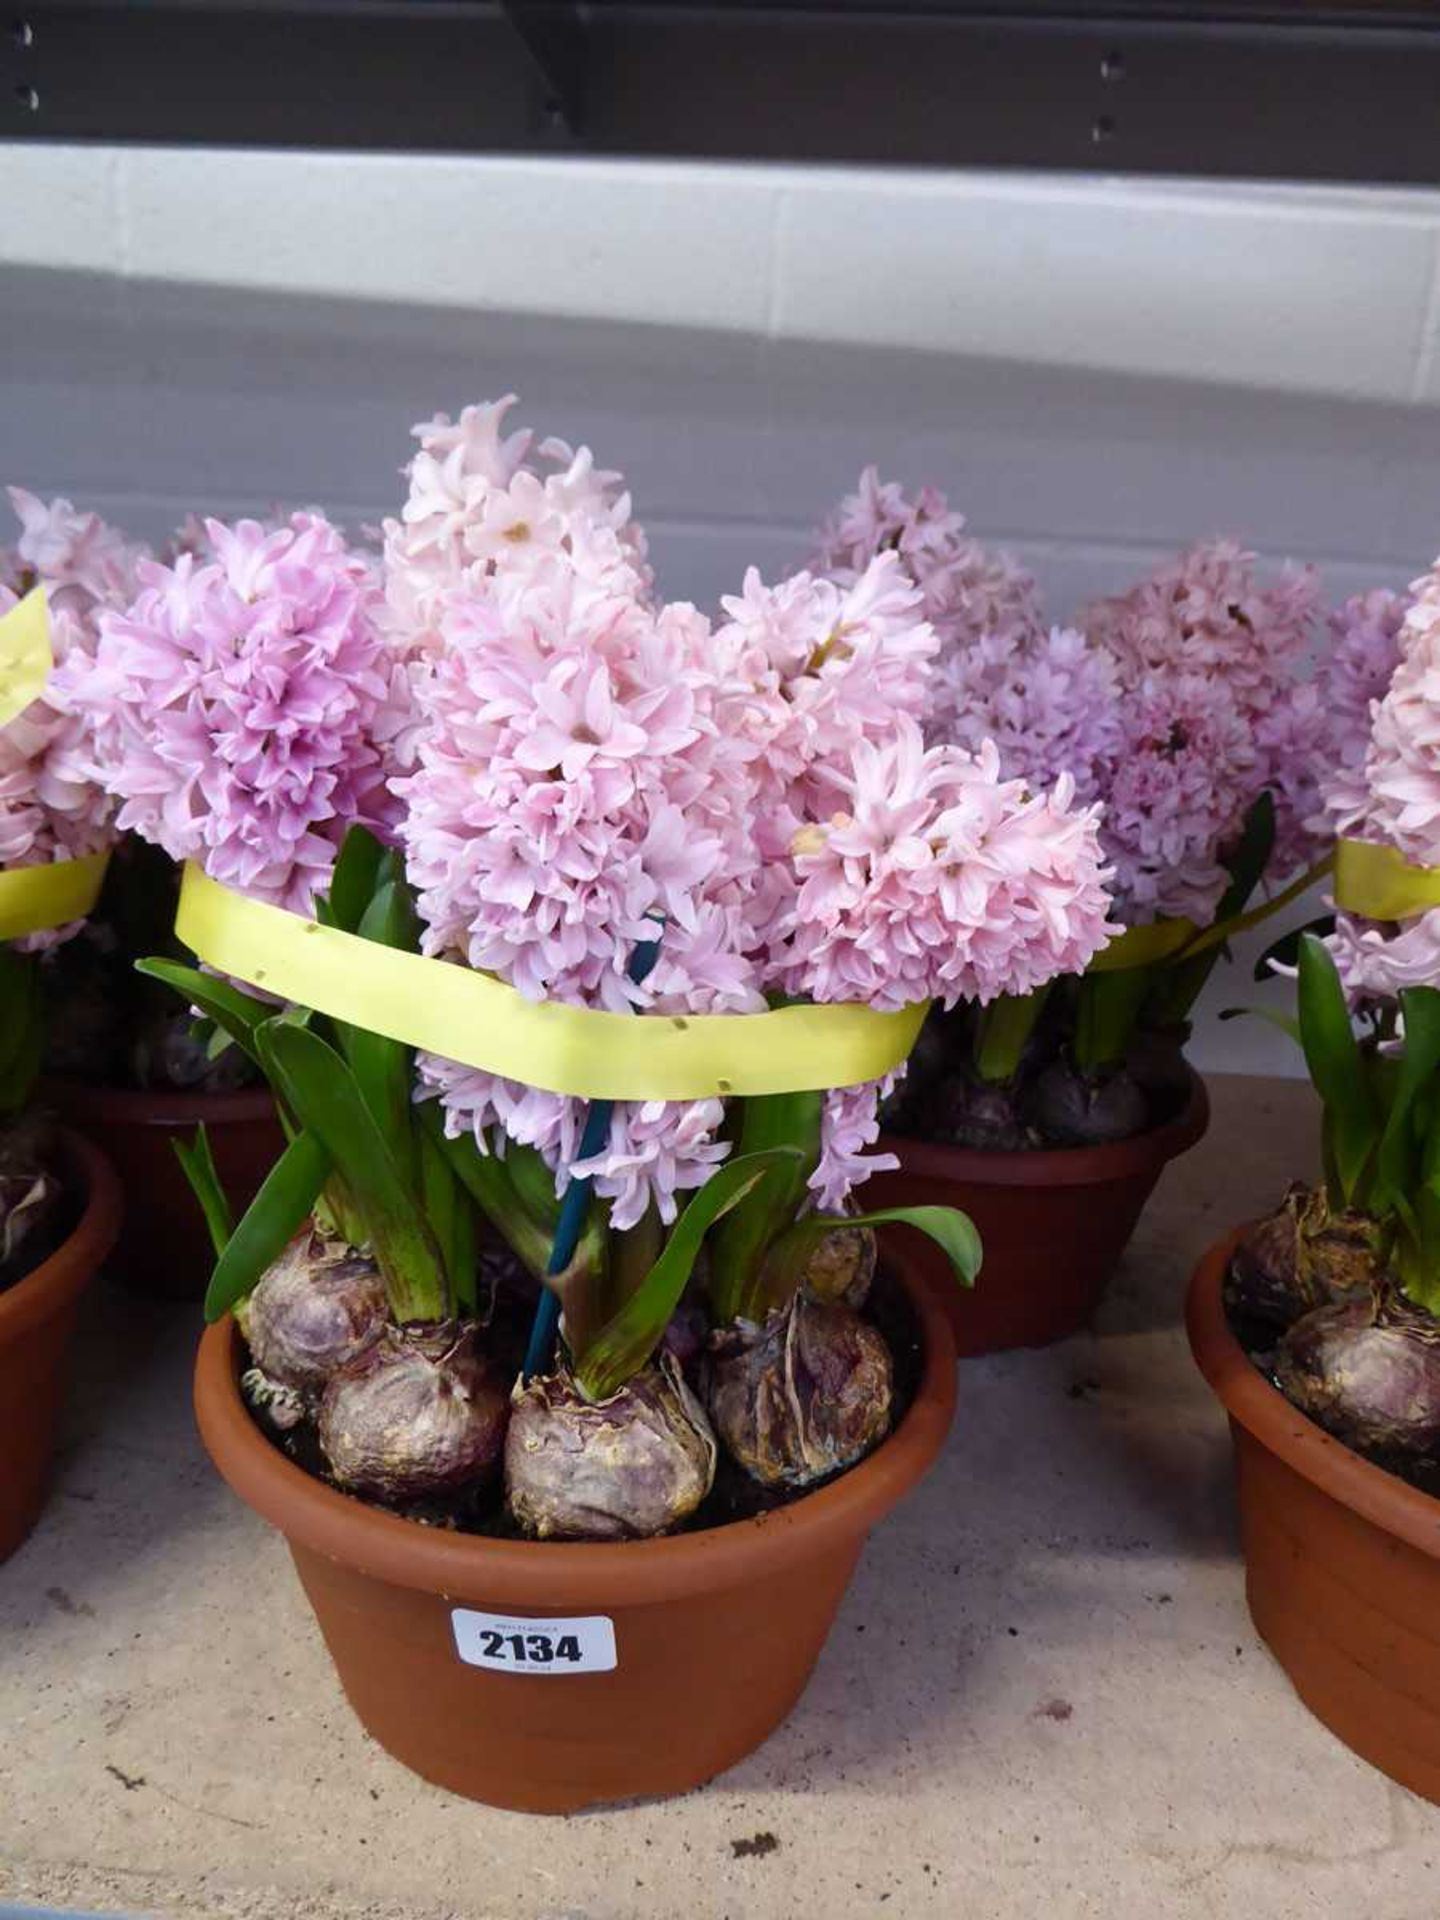 2 pots of pink hyacinths